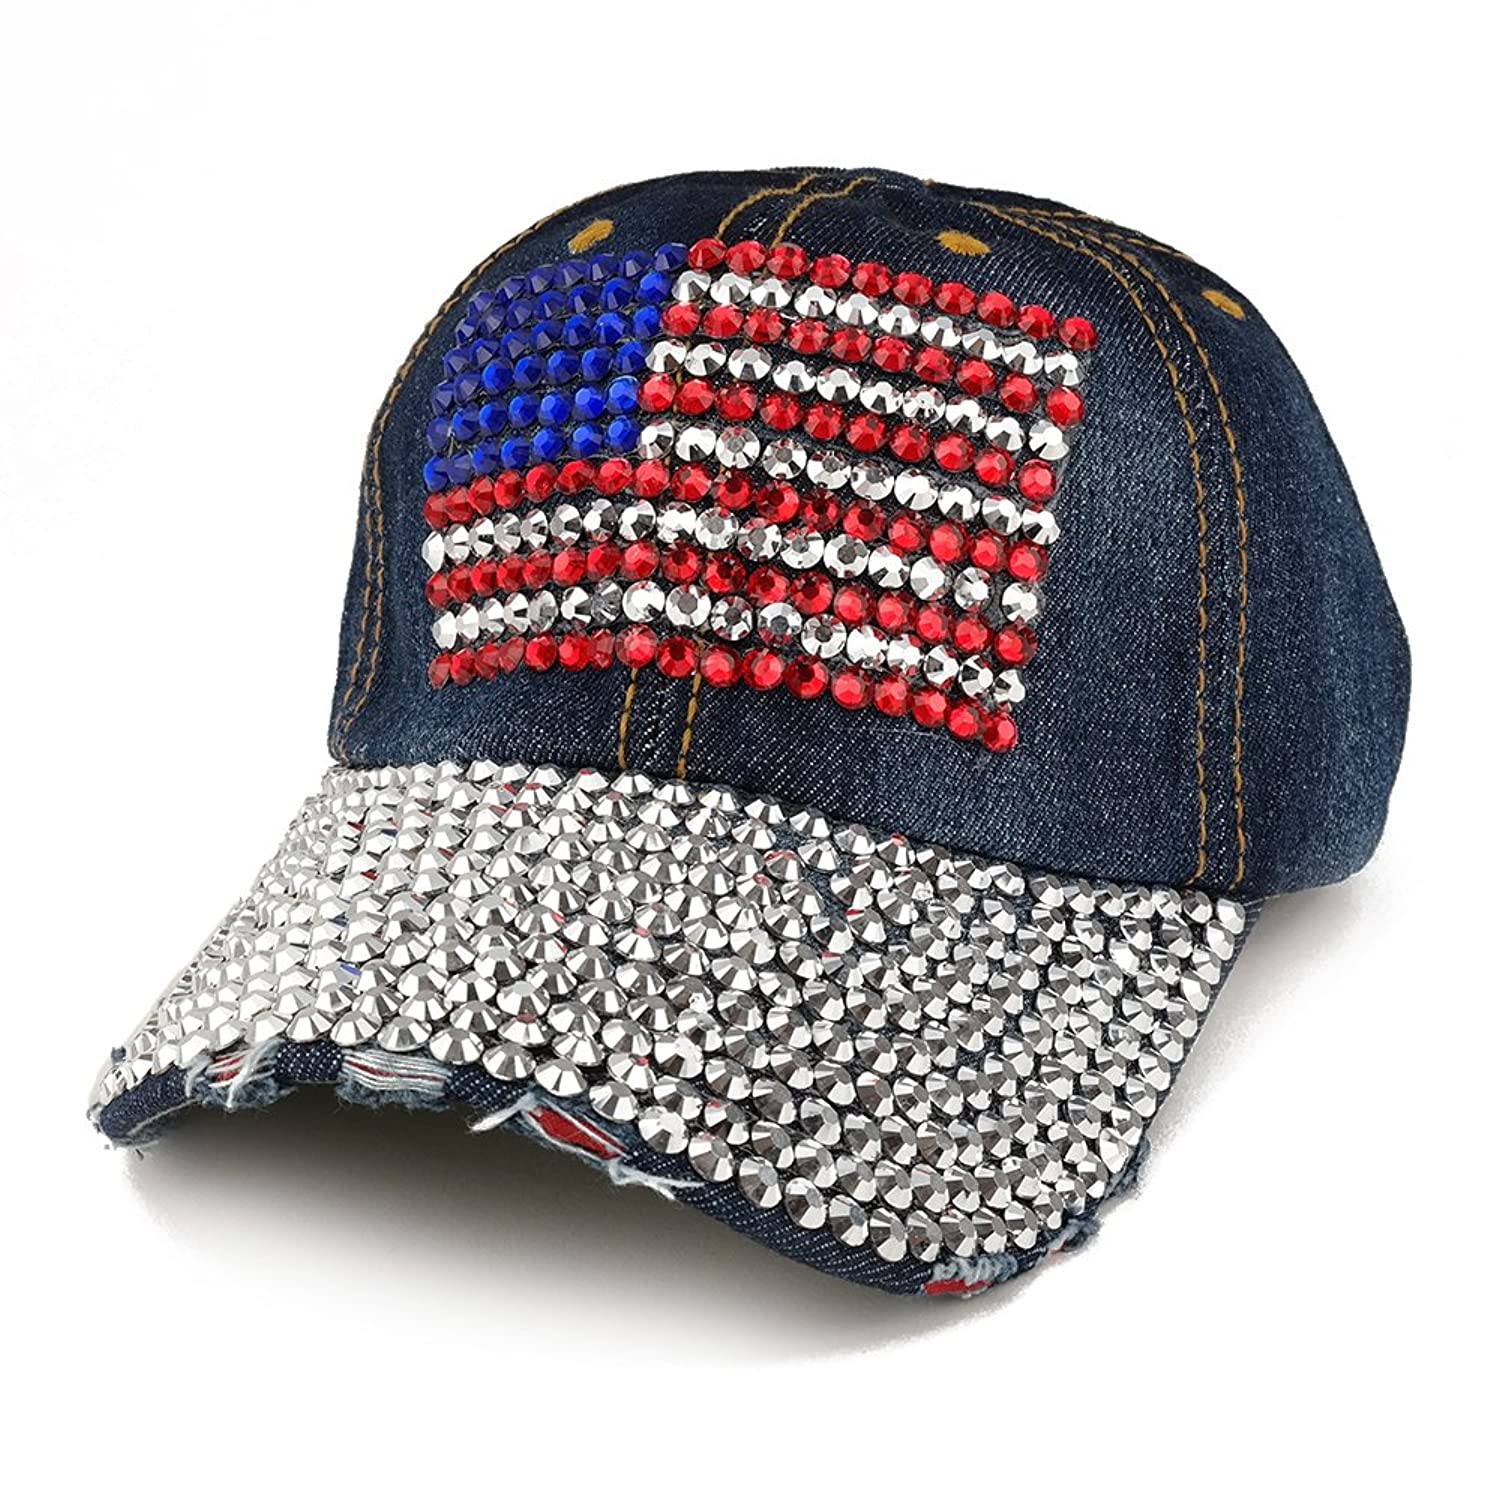 USA Stylish Rhinestone Bling Bedazzled American Flag Cotton Denim Adjustable Cotton Cap